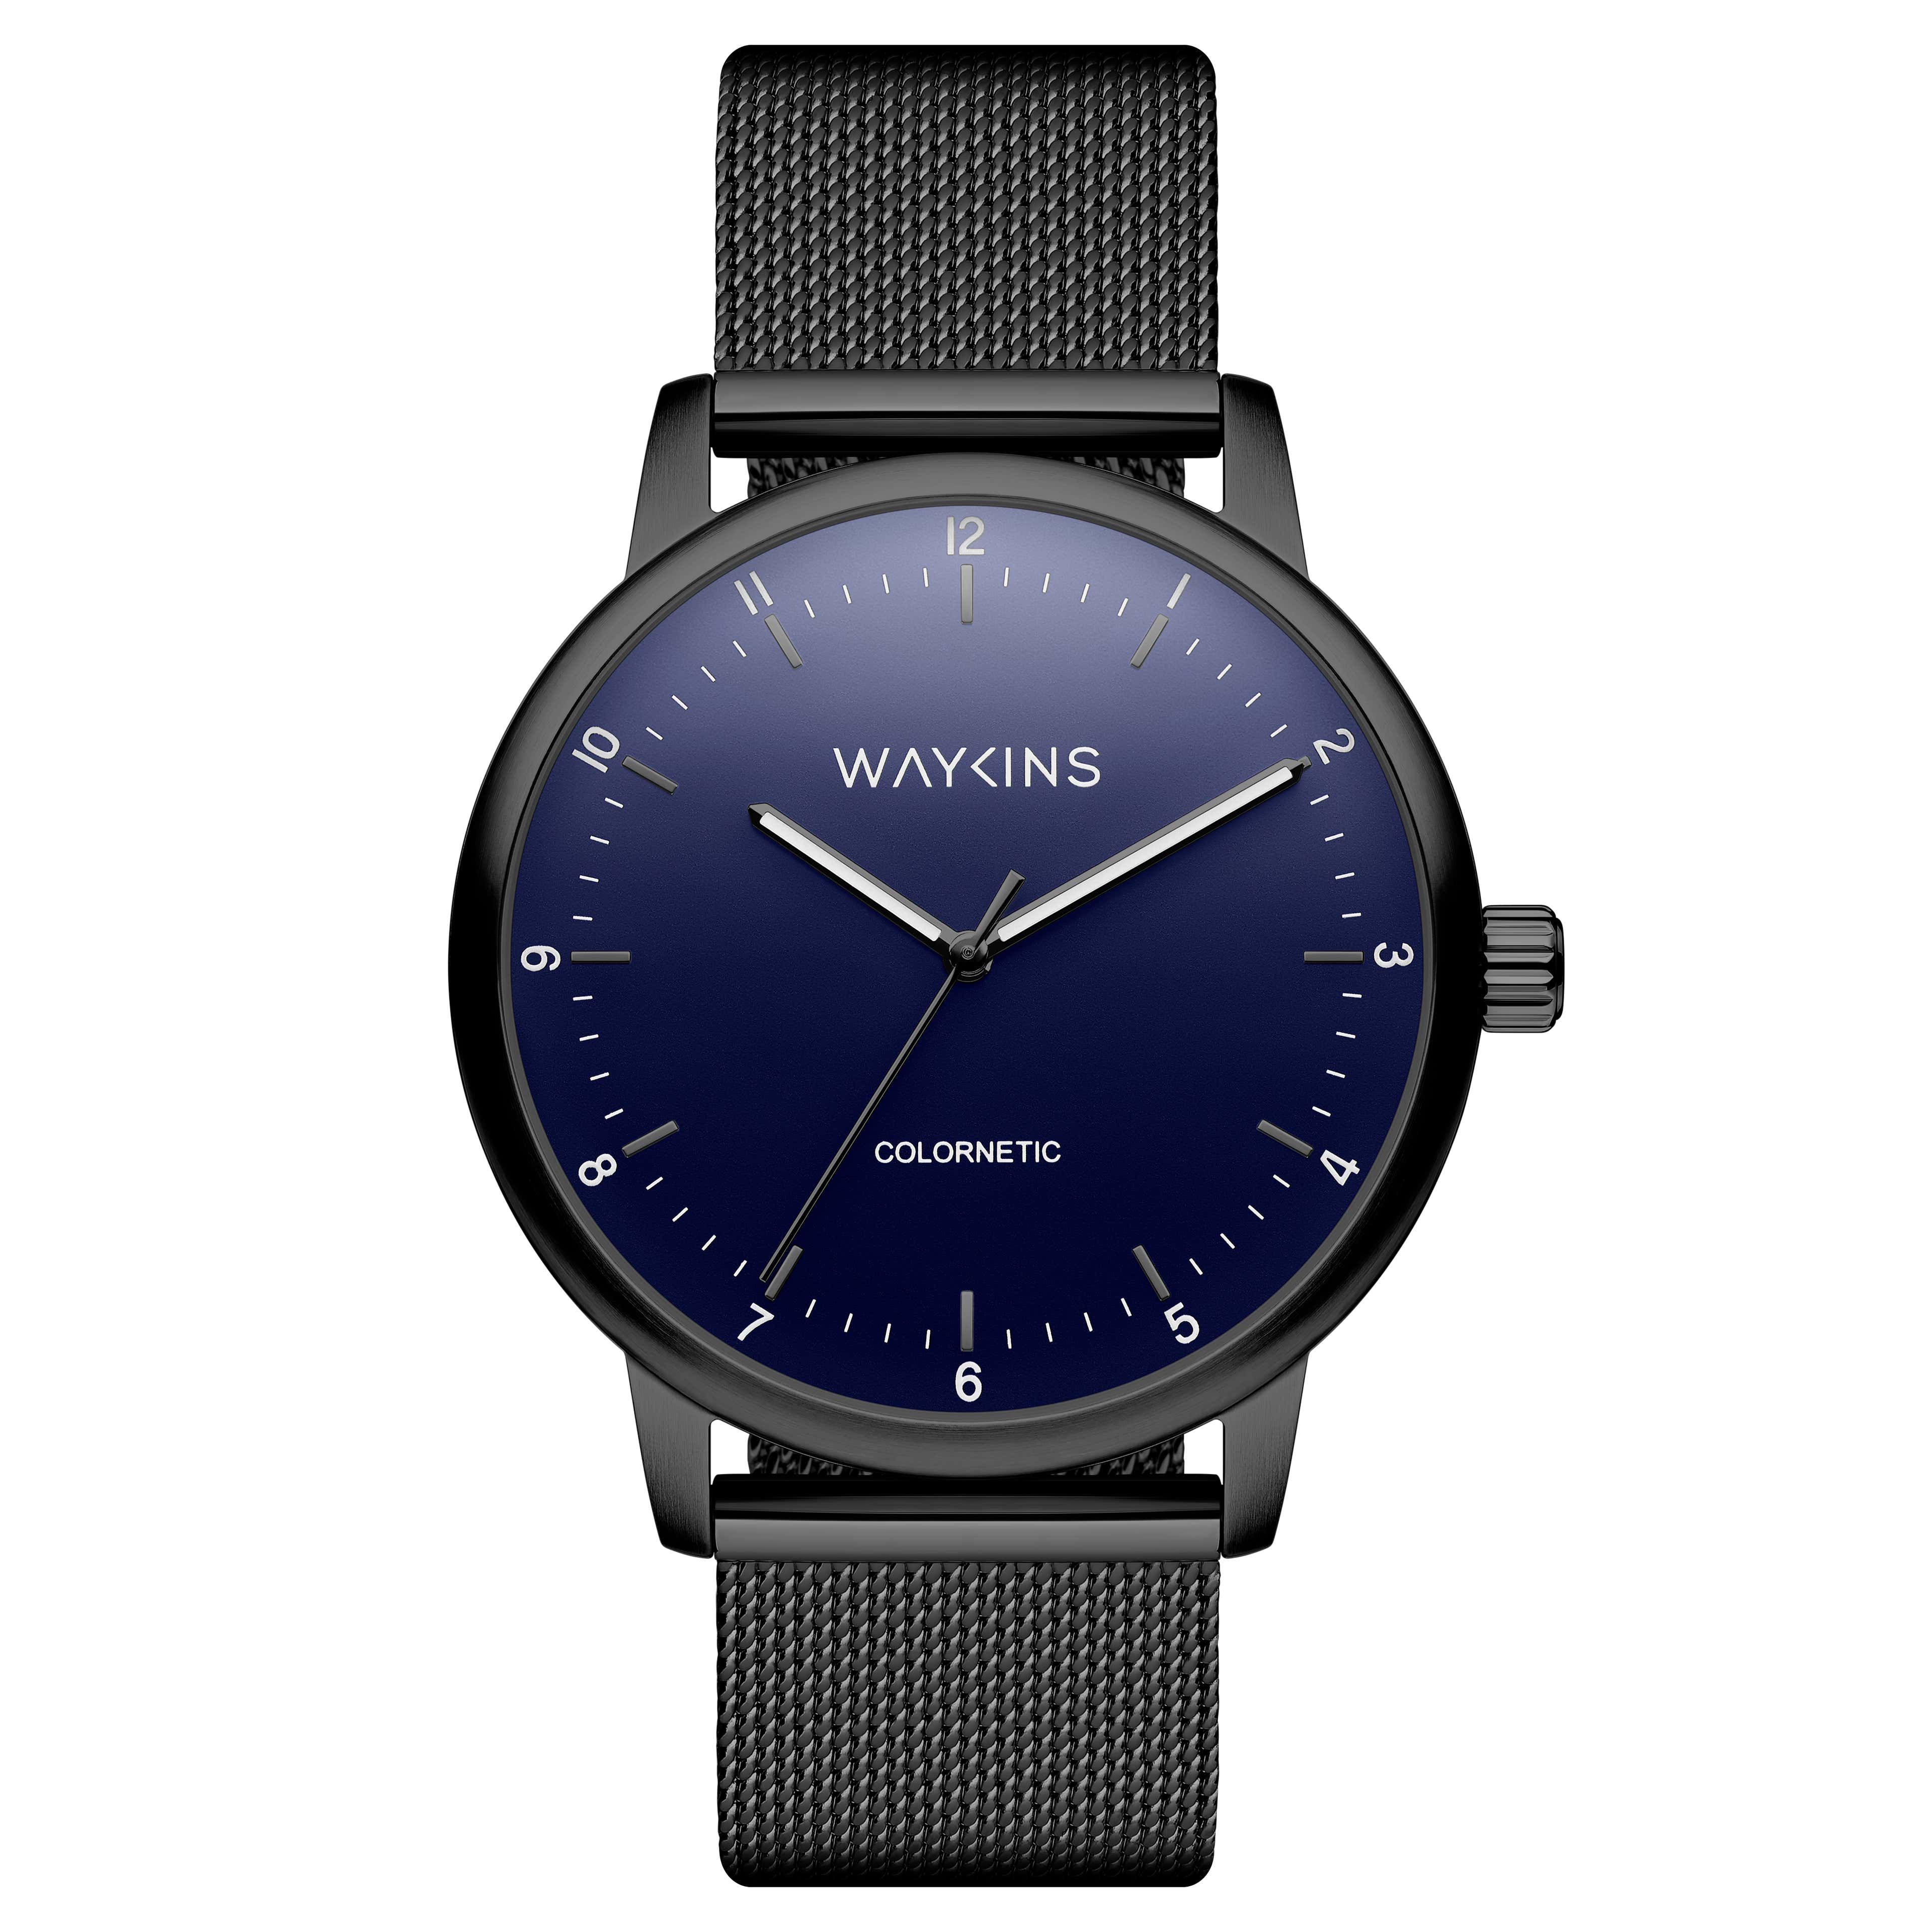 Colornetic | Armbanduhr aus schwarzem Stahl mit Farbwechsel